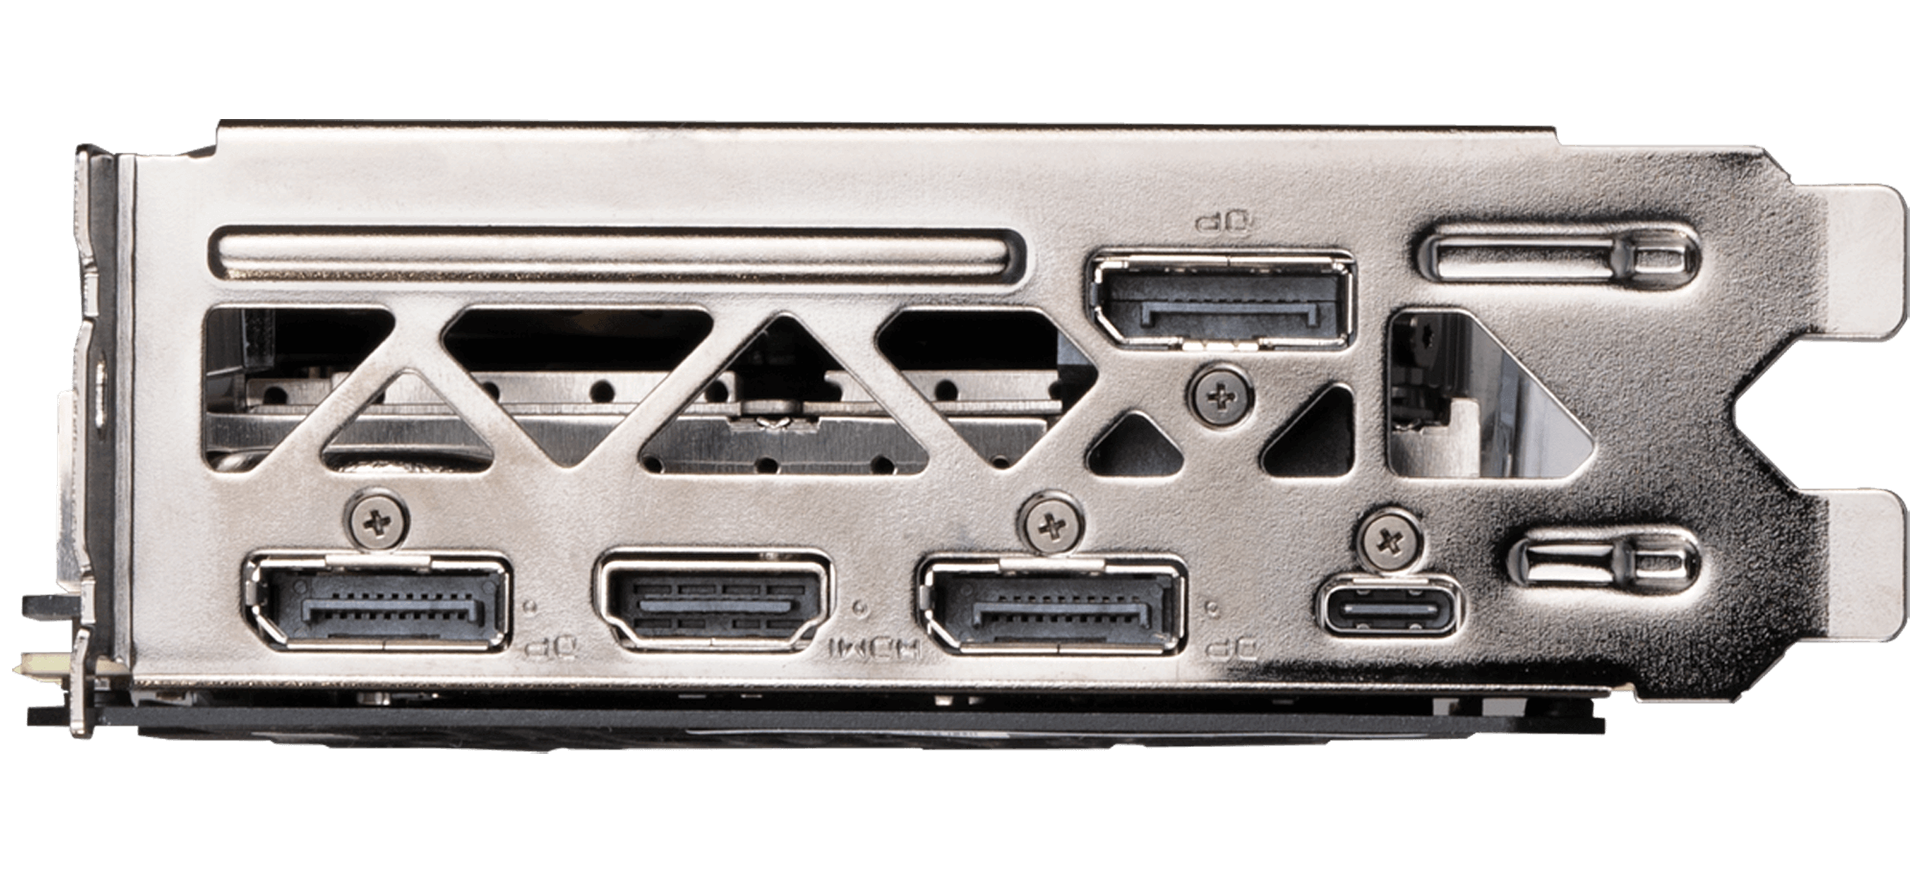 Umoderne hvor ofte barm Review: EVGA GeForce RTX 2070 Super XC Gaming - Graphics - HEXUS.net